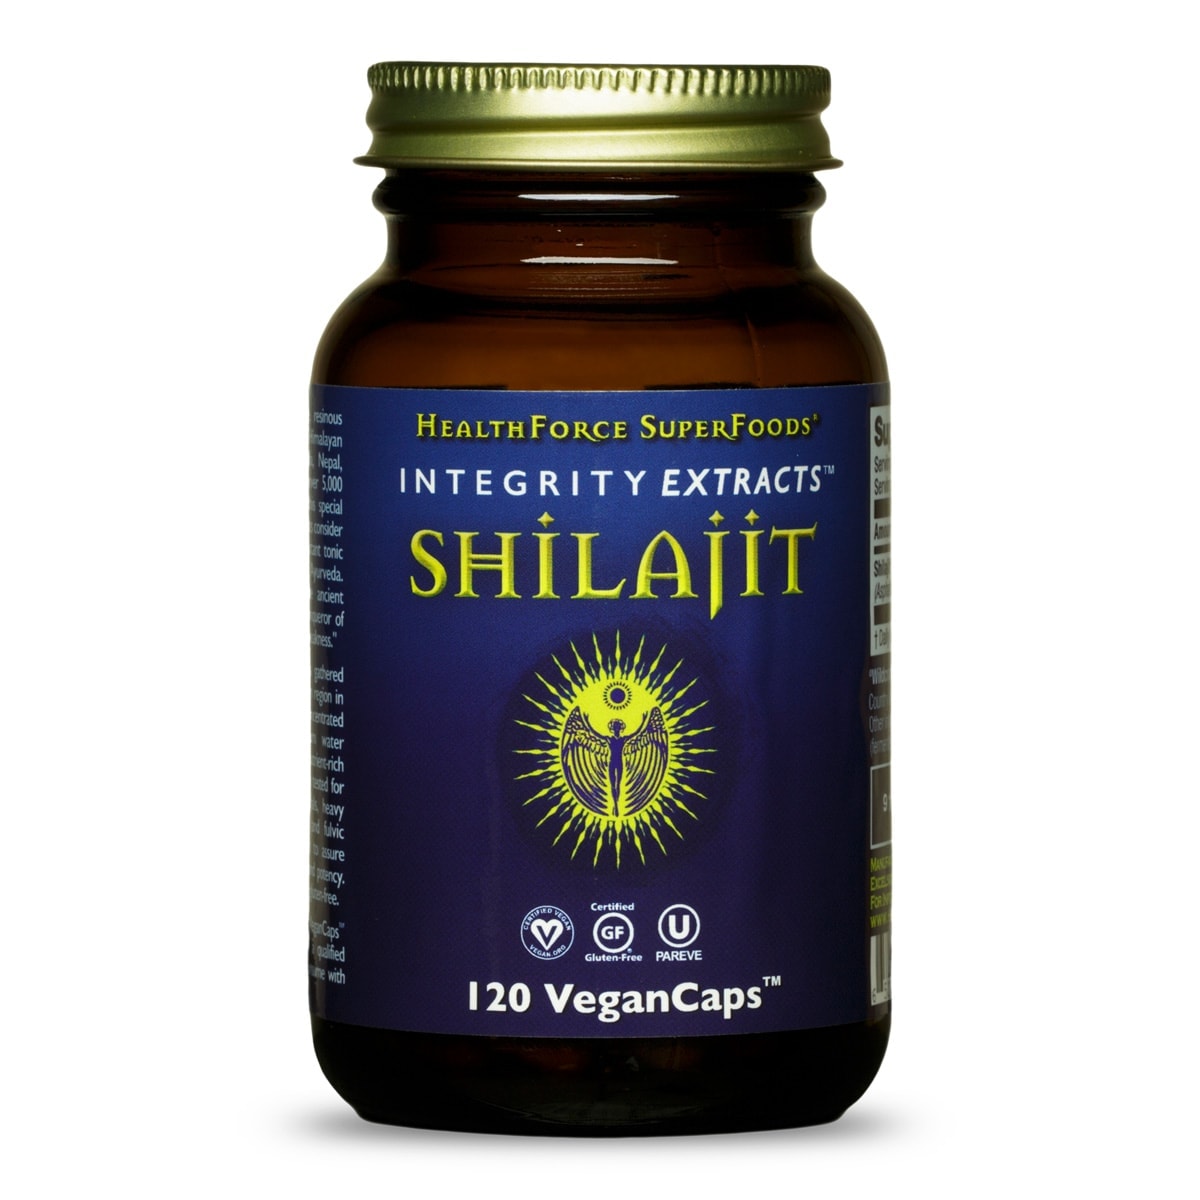 Integrity Extracts™ Shilajit Nahrungsergänzungsmittel HealthForce SuperFoods - Genuine Selection